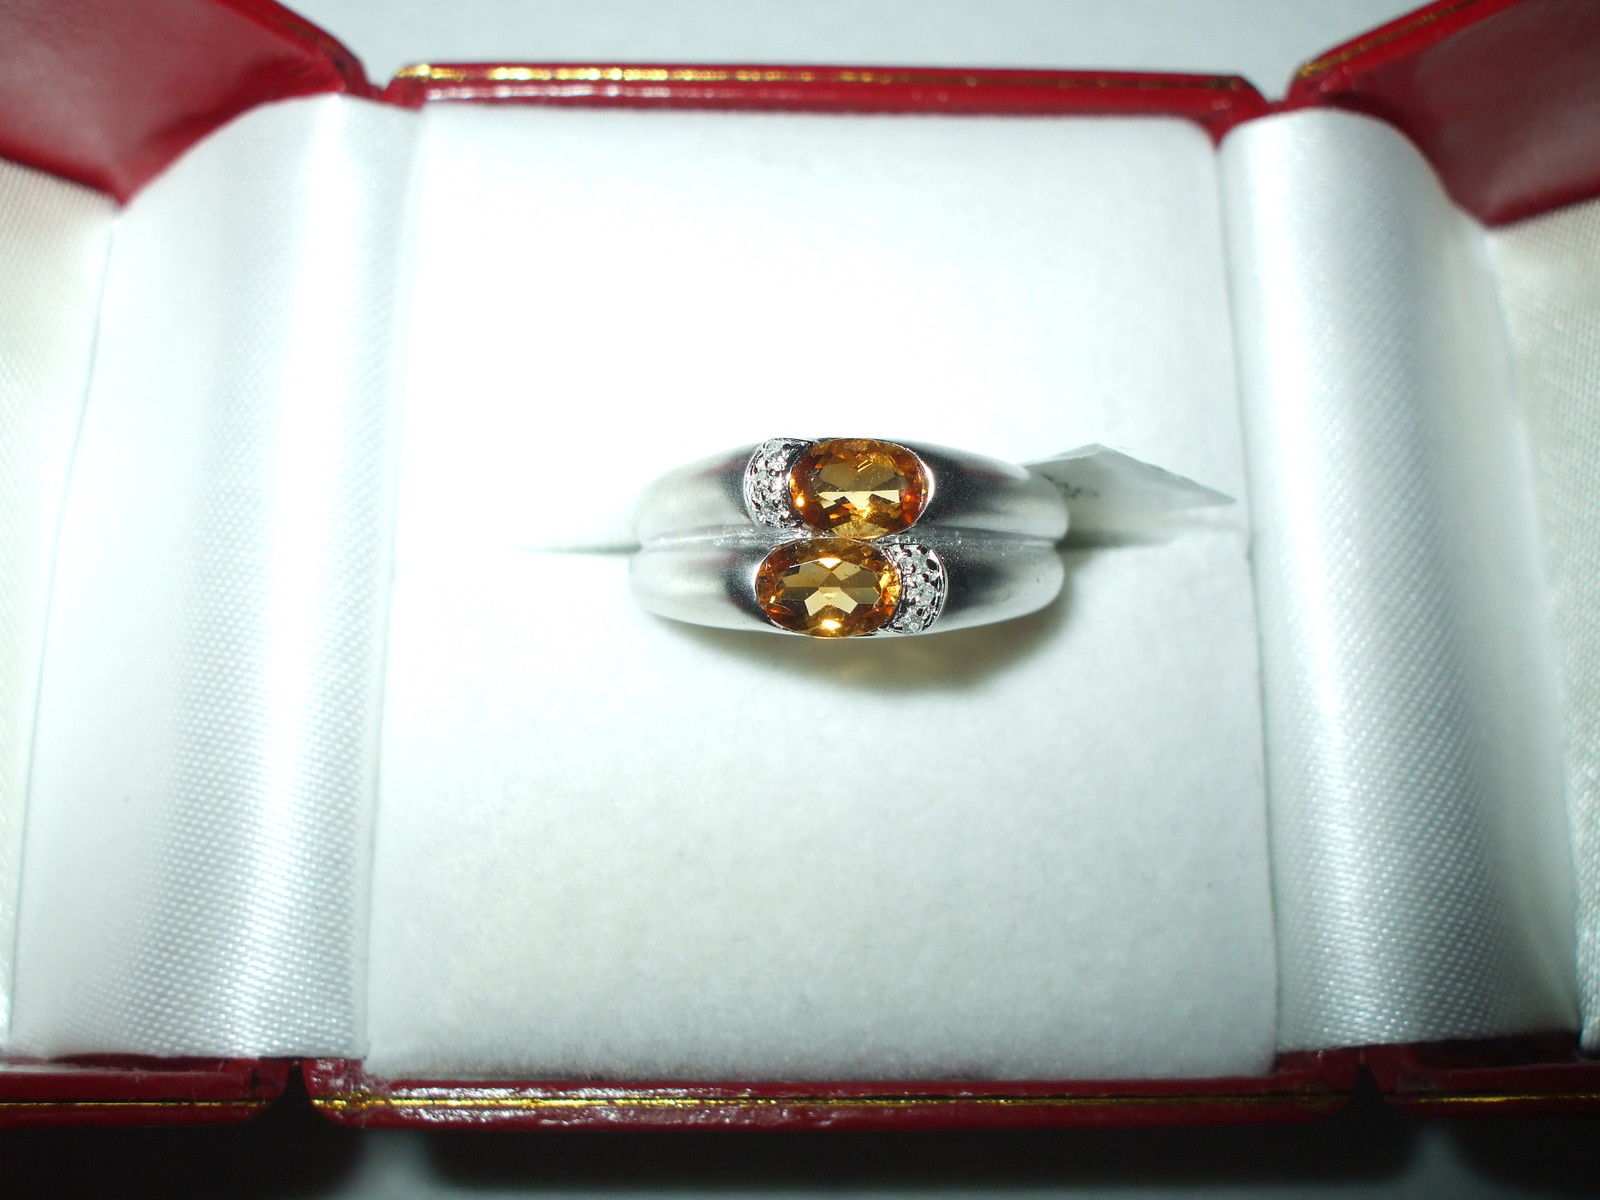 Genuine .82 cttw Citrine Ring 14K white gold NWT $600 Size 7